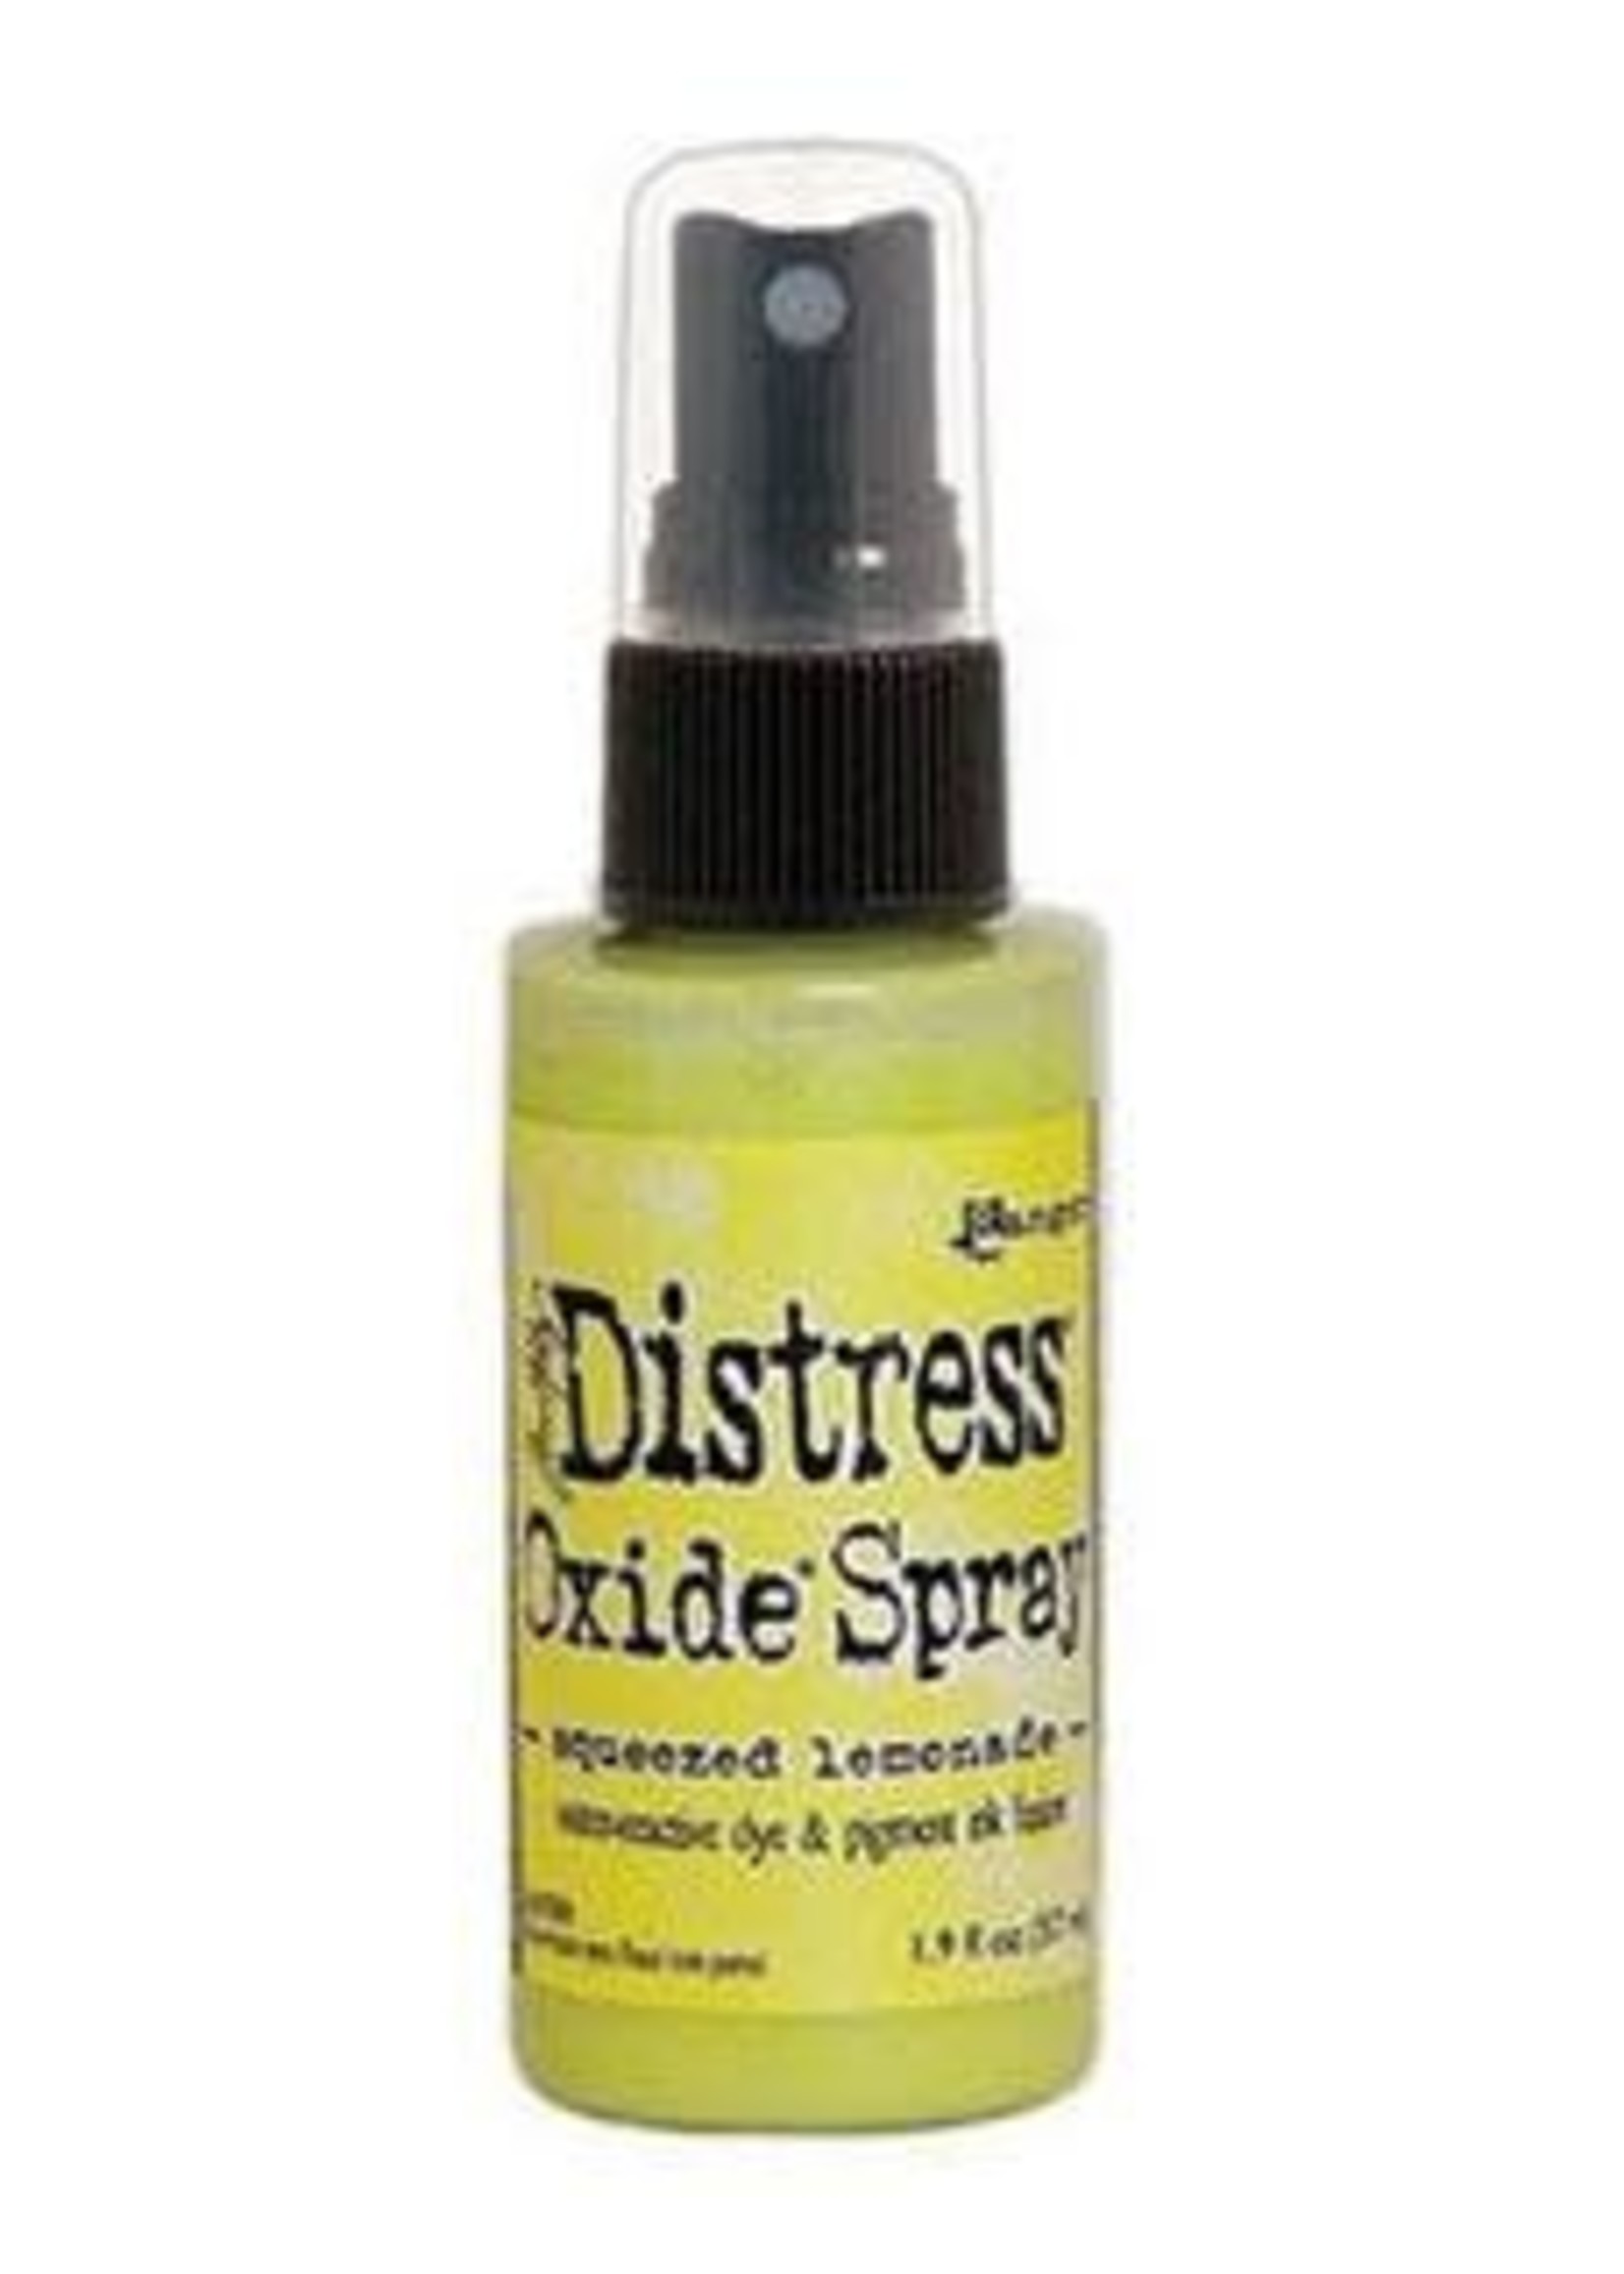 RANGER Distress Oxide Spray Squeezed Lemon